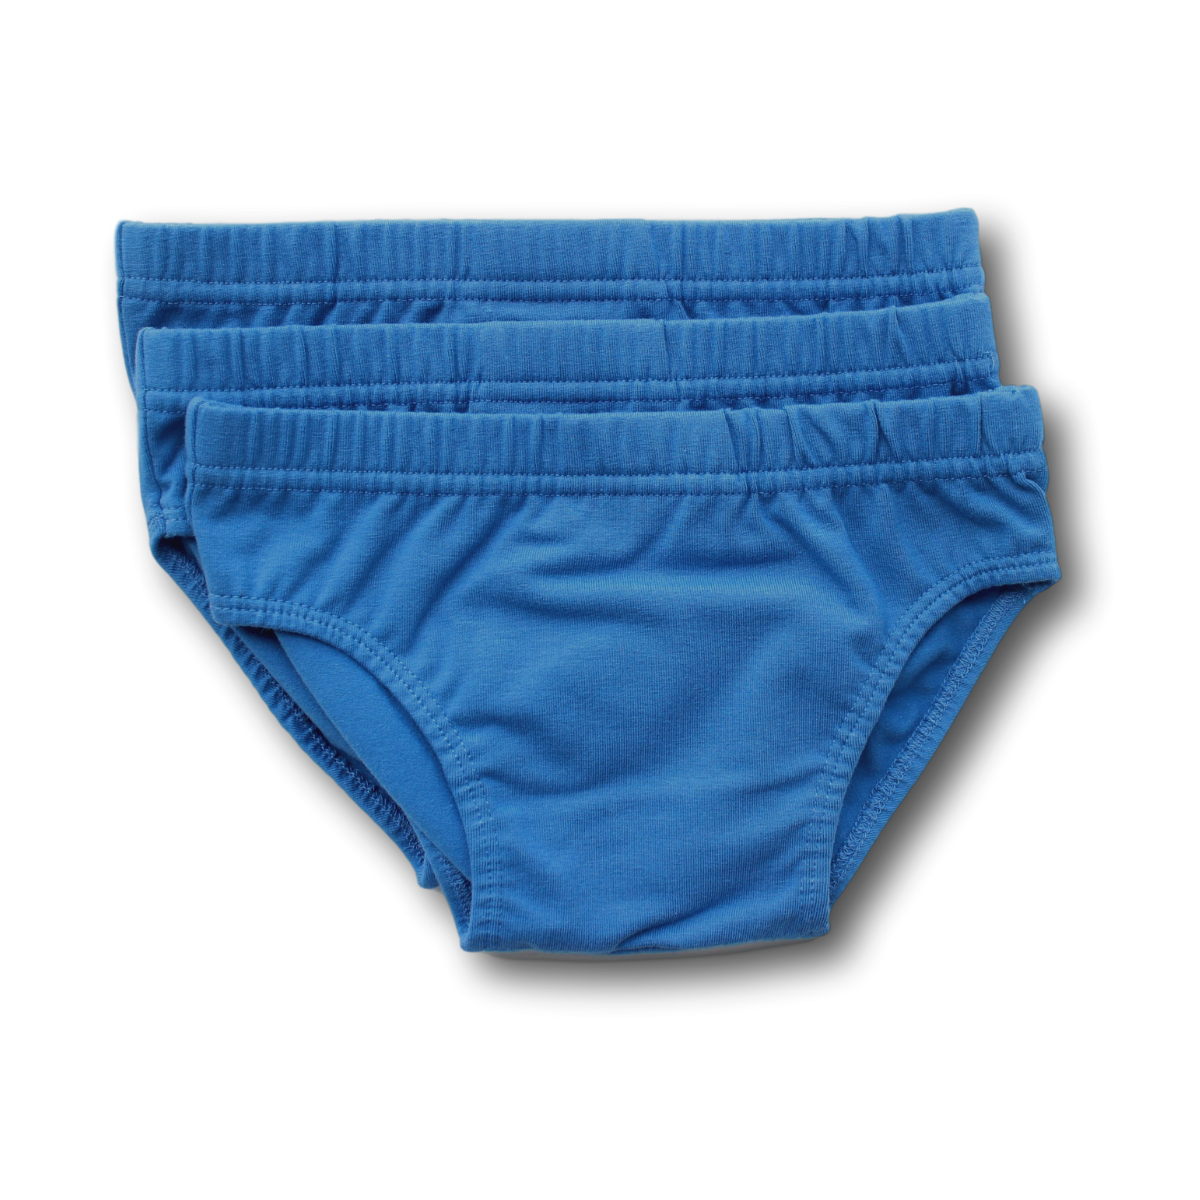 Kids' Underwear: Comfortable & Organic Quality